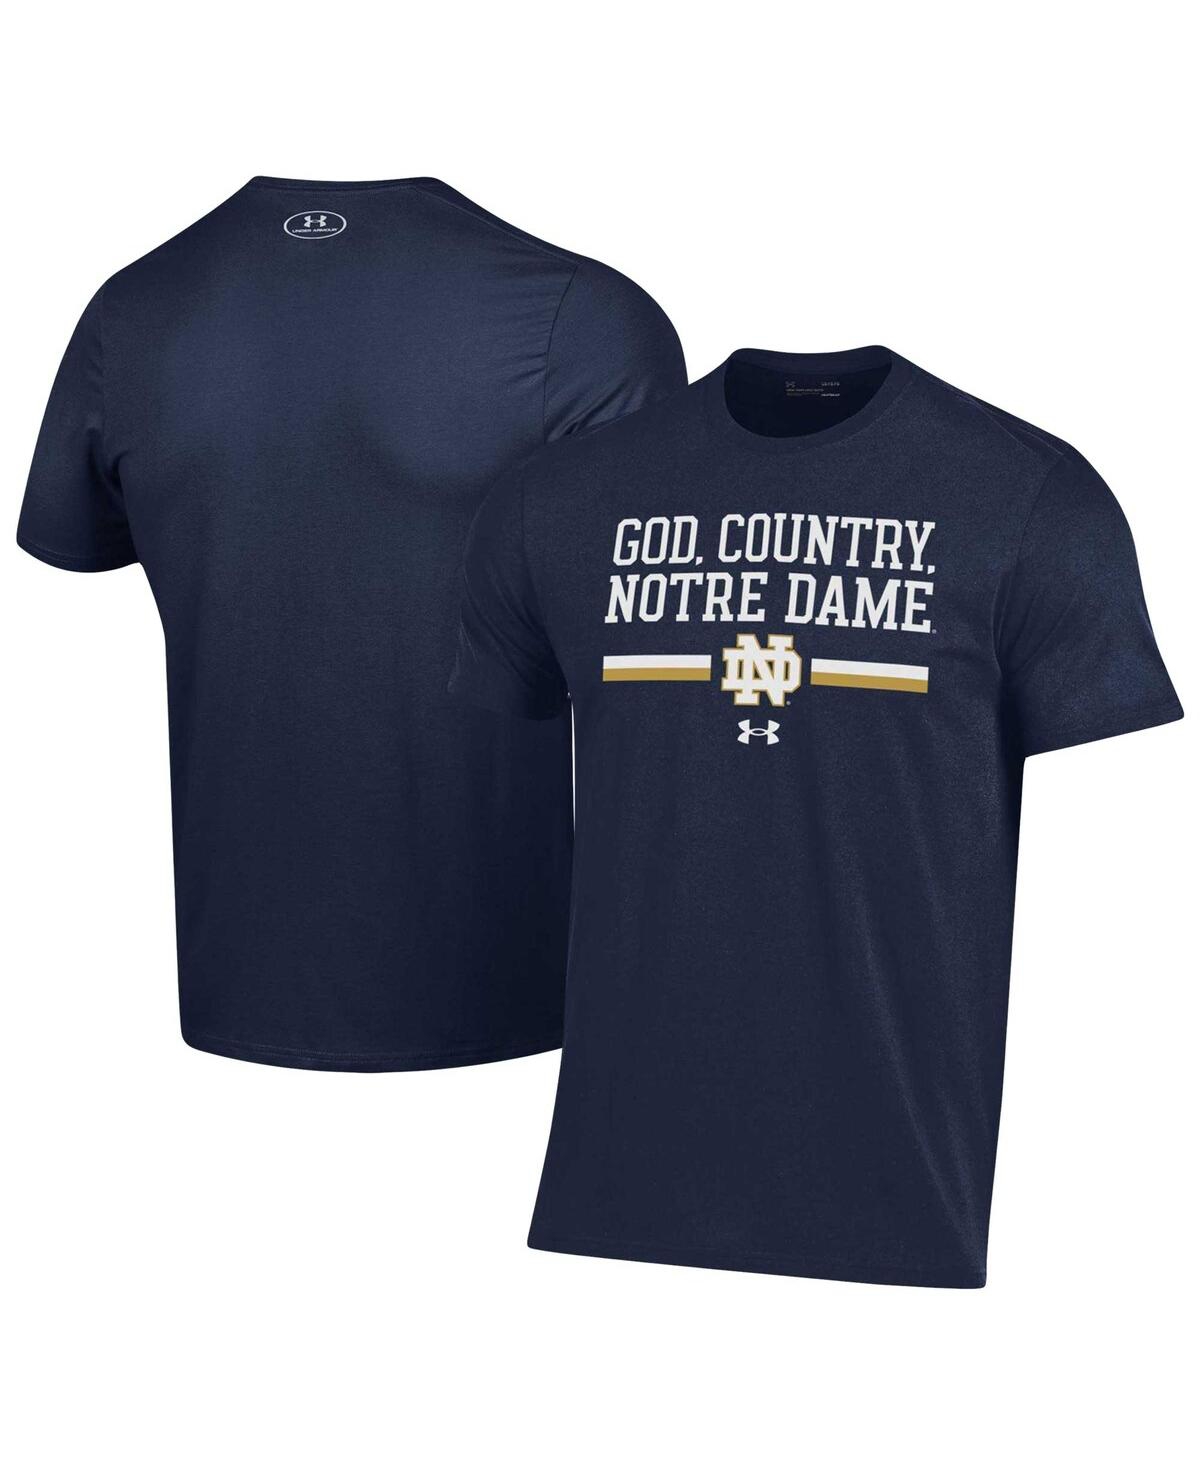 Under Armour Men's  Navy Notre Dame Fighting Irish God Country T-shirt